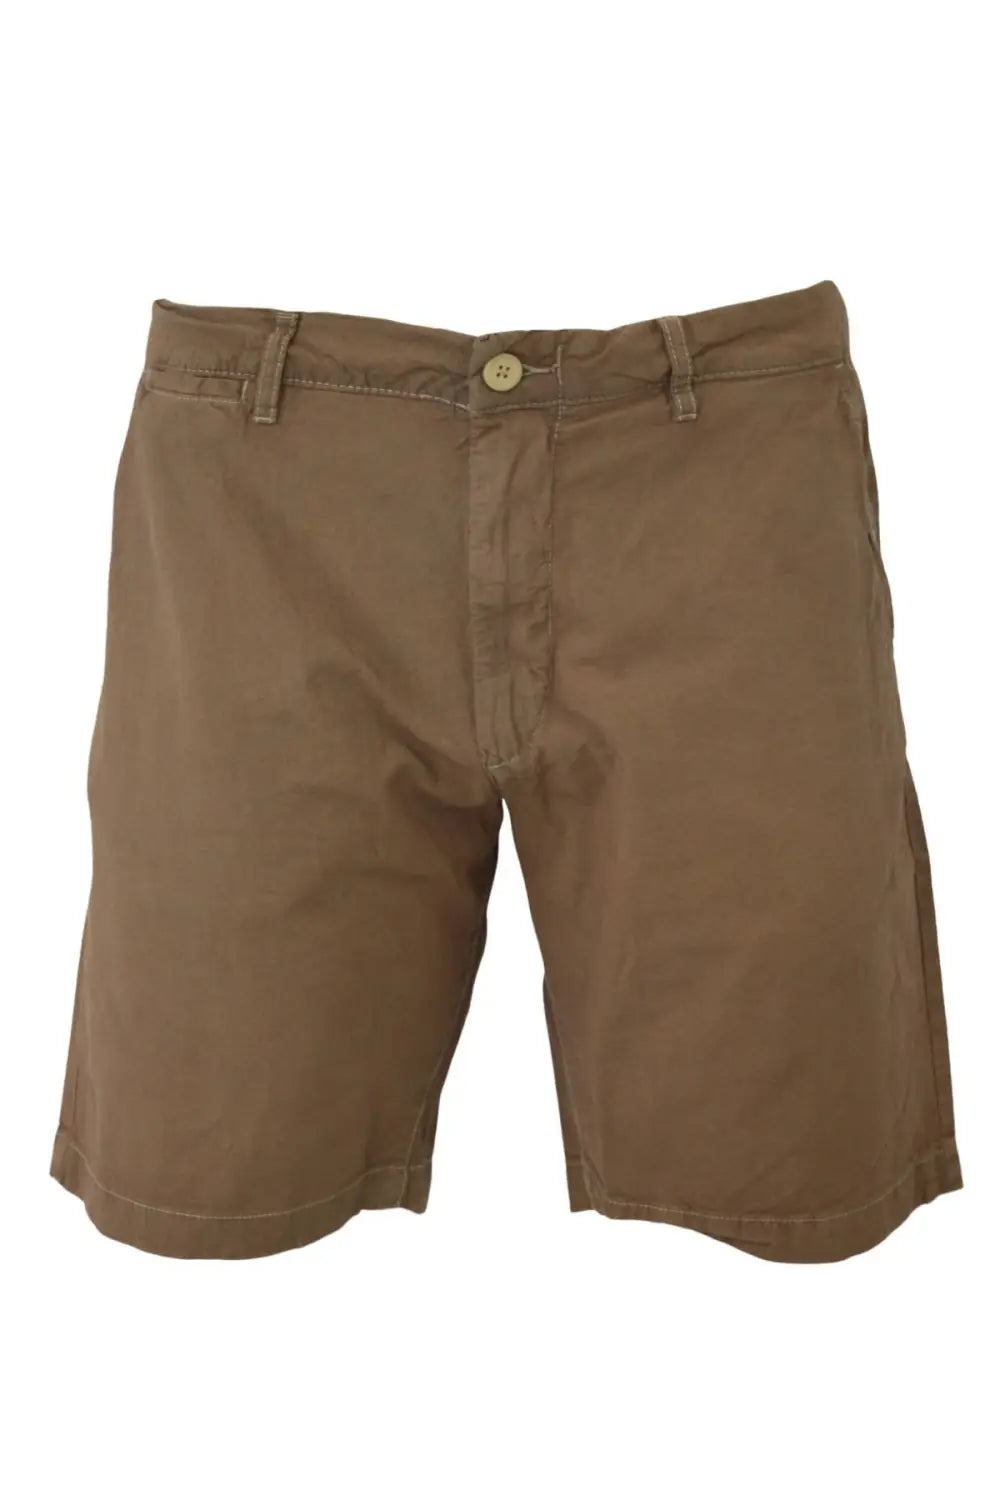 H&M Lightweight Cotton Chino Shorts